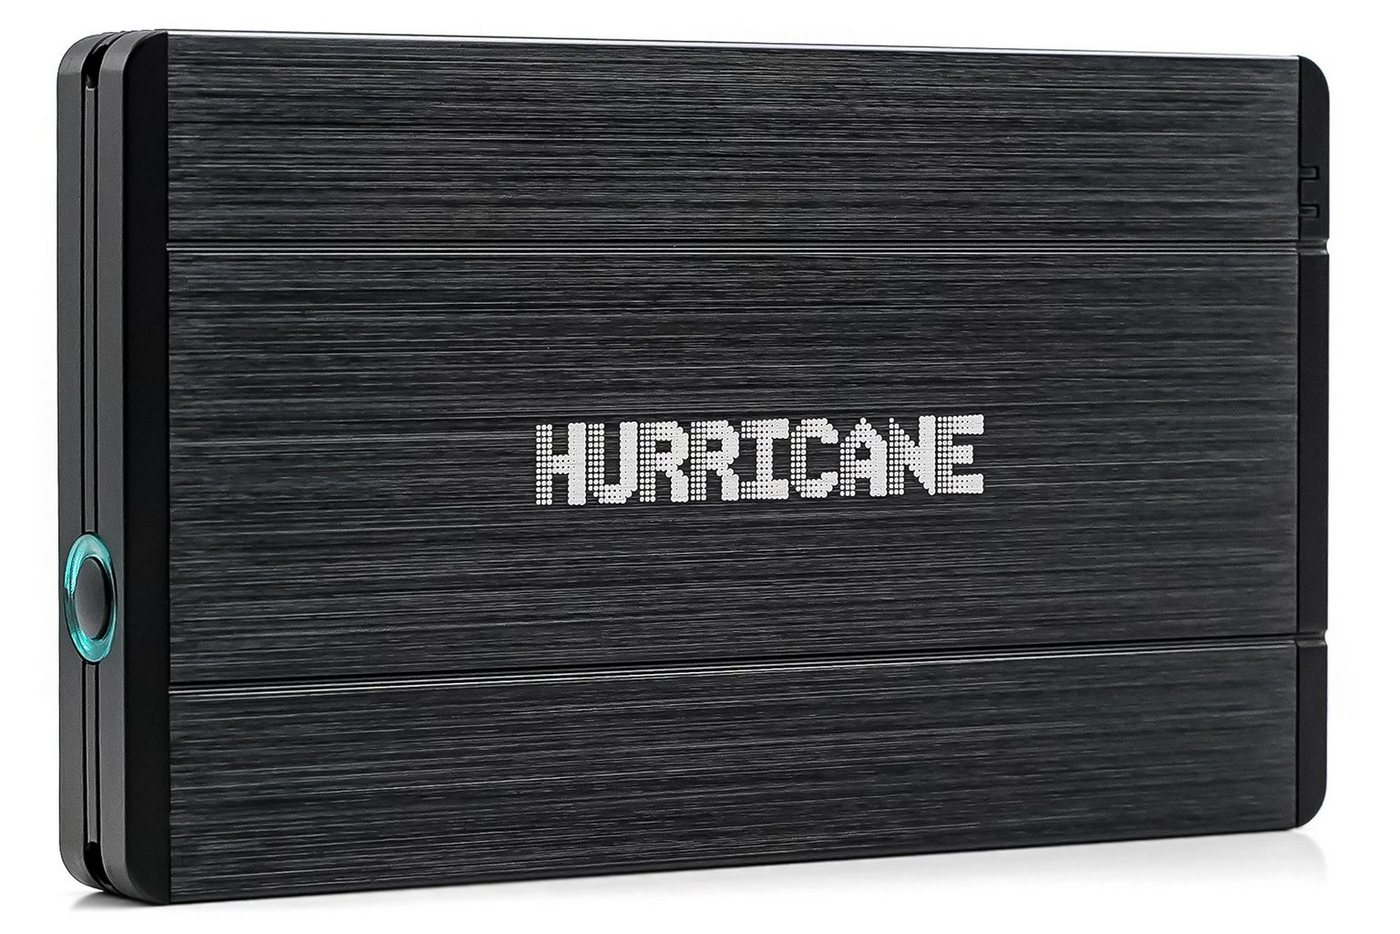 HURRICANE Hurricane 12.5mm GD25650 300GB 2.5 USB 3.0 Externe Aluminium Festpla externe HDD-Festplatte" von HURRICANE